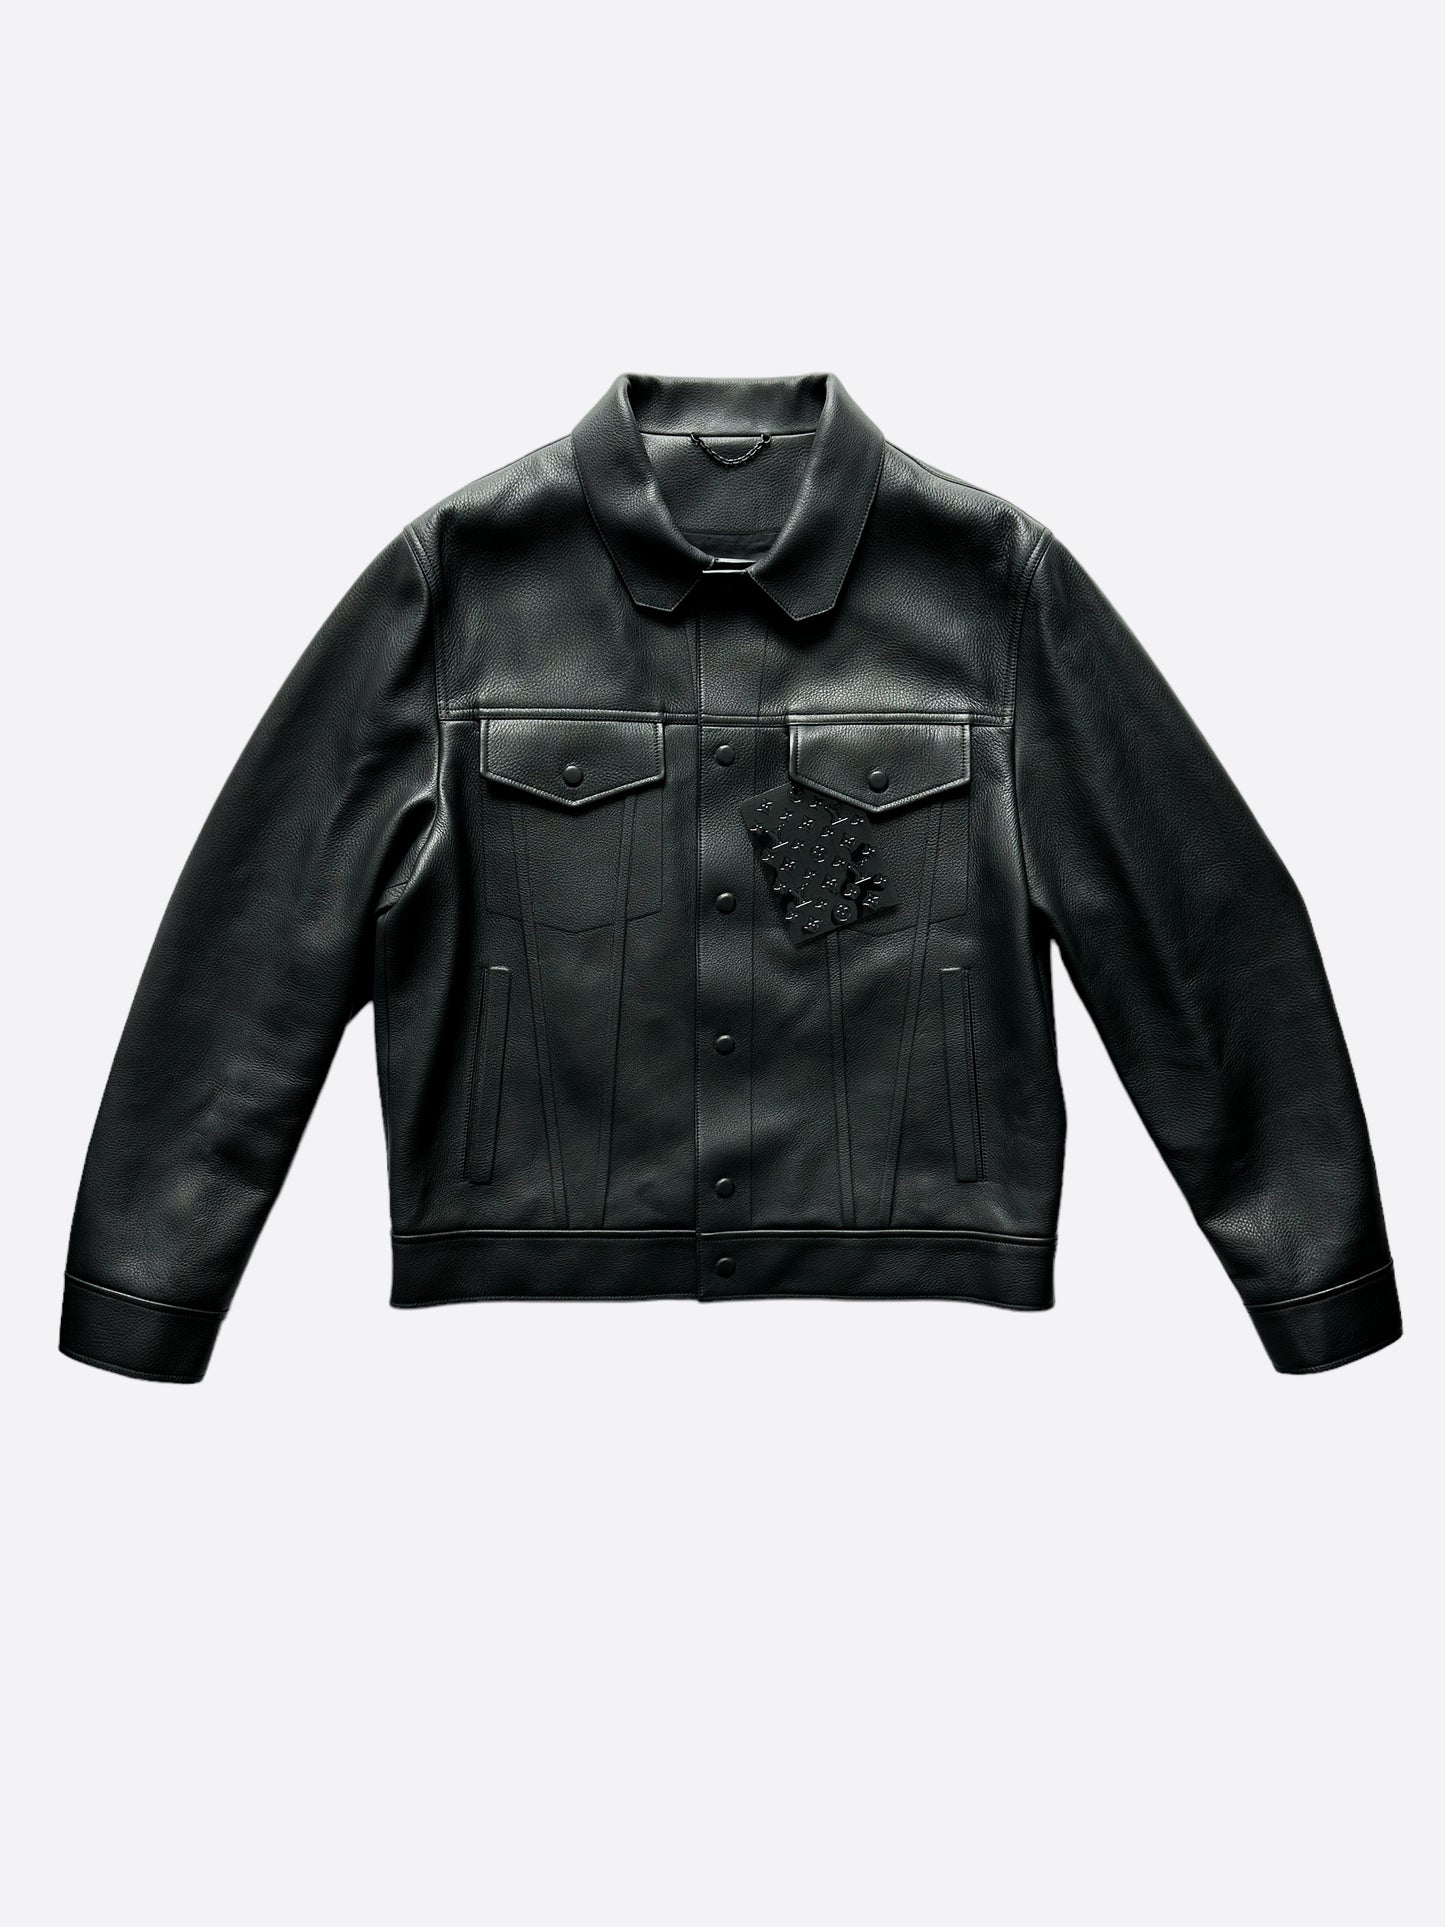 Louis Vuitton Monogram Leather Trucker Jacket BLACK. Size 44